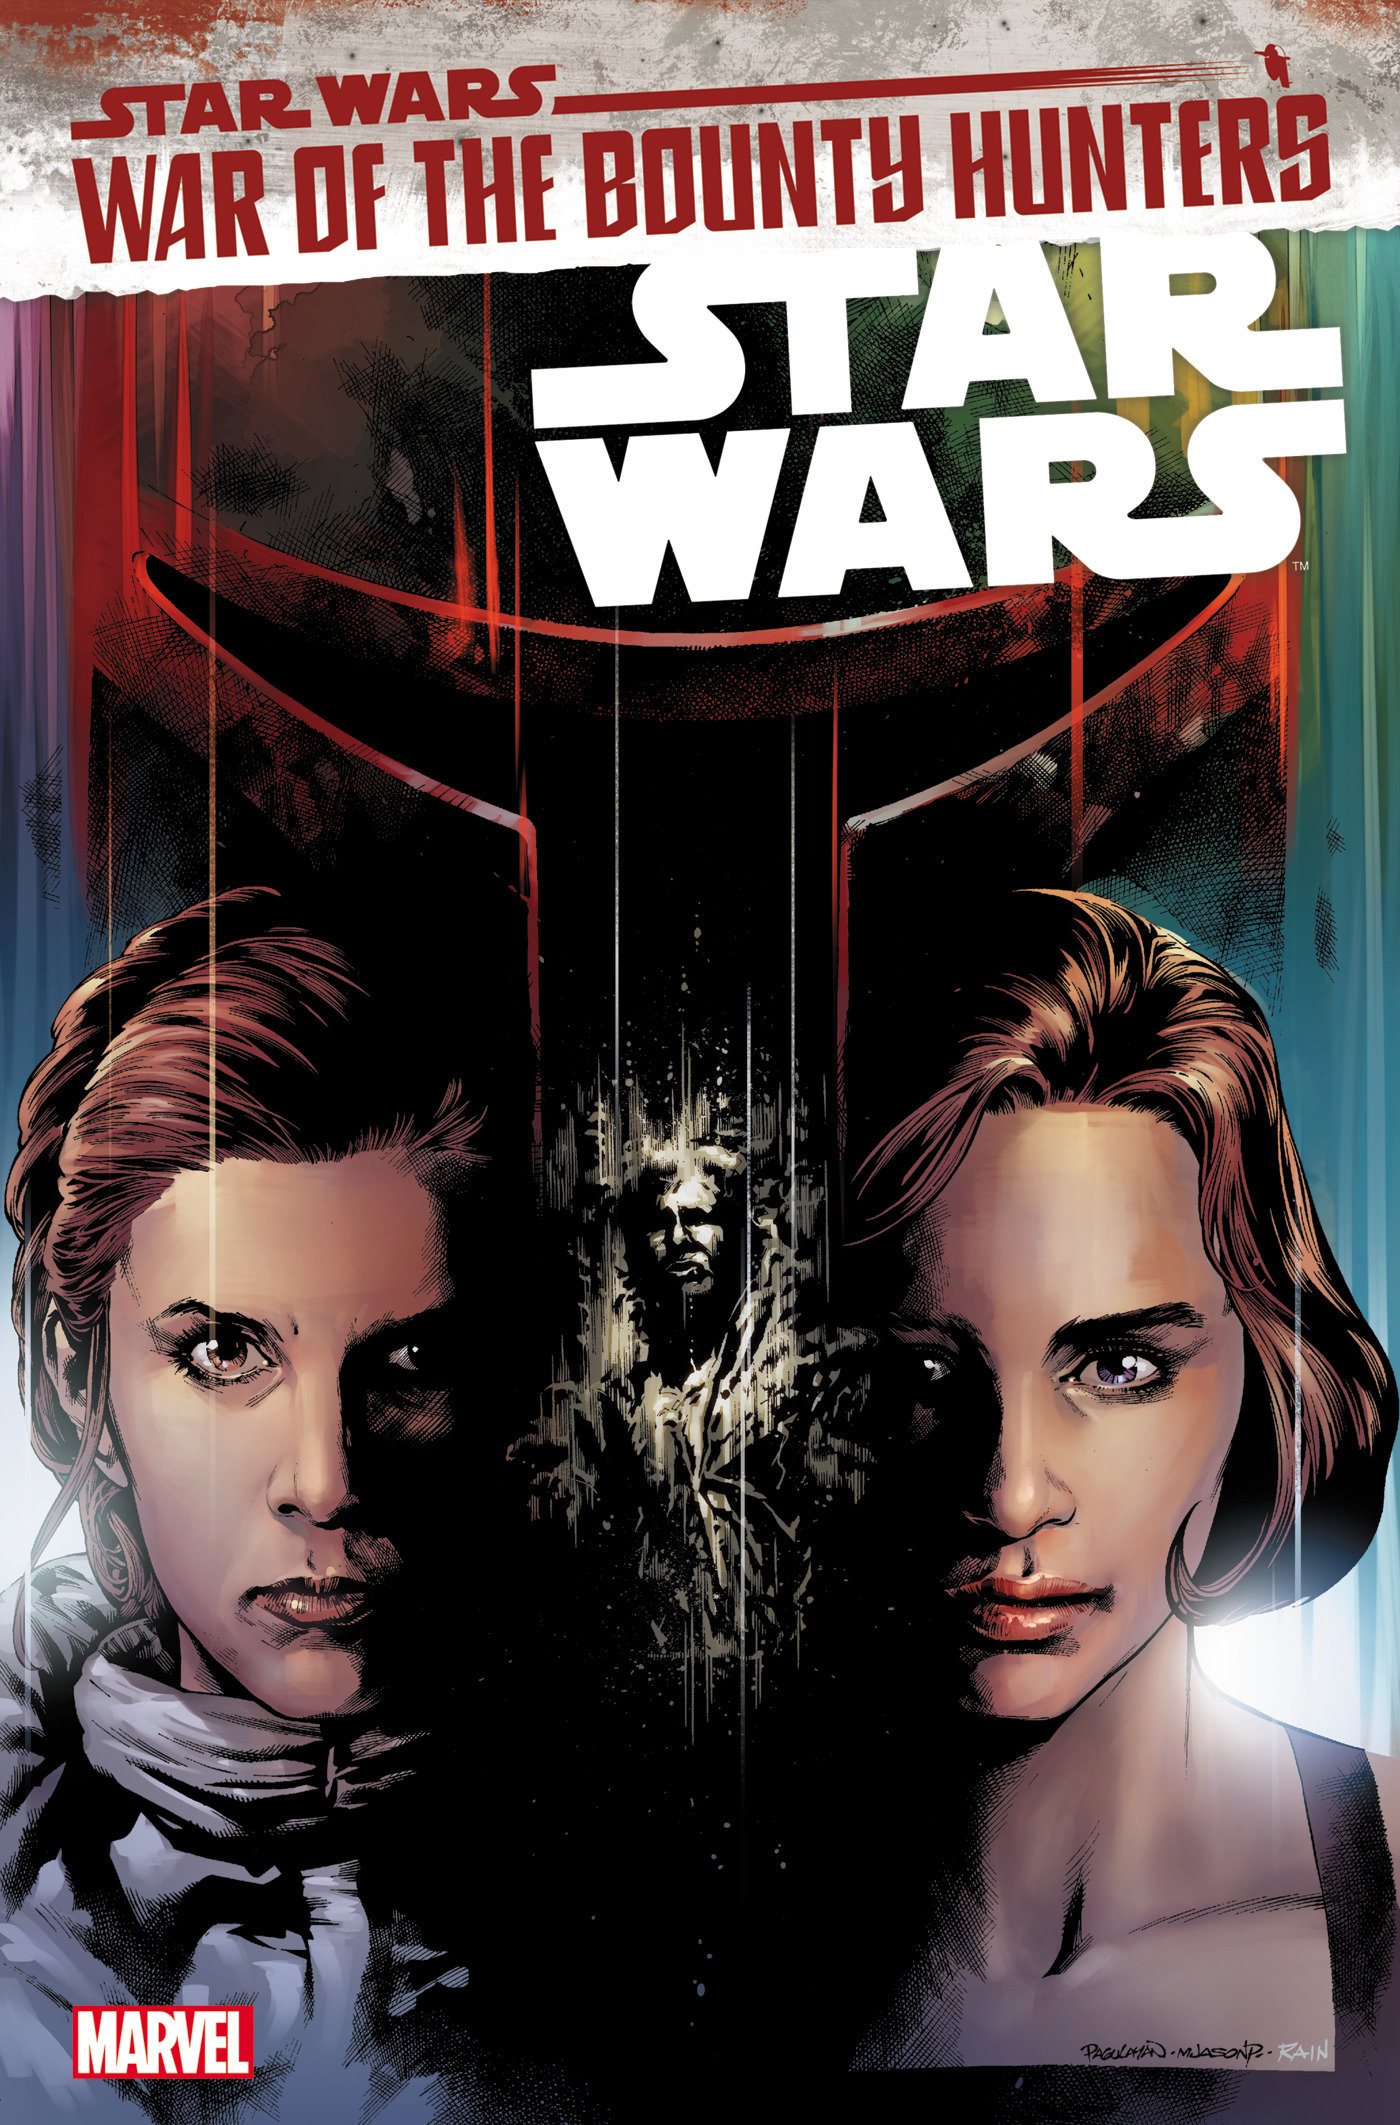 Star Wars #18 War of the Bounty Hunters (2020)